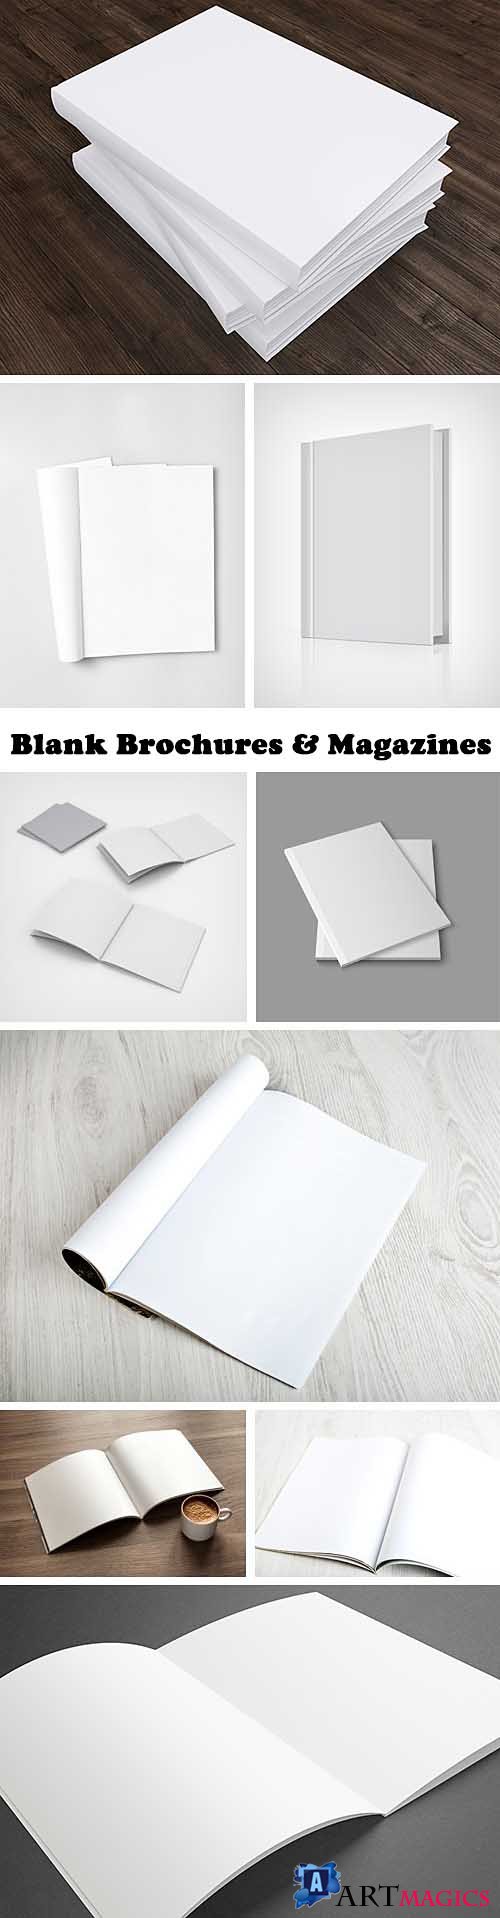 Blank Brochures & Magazines